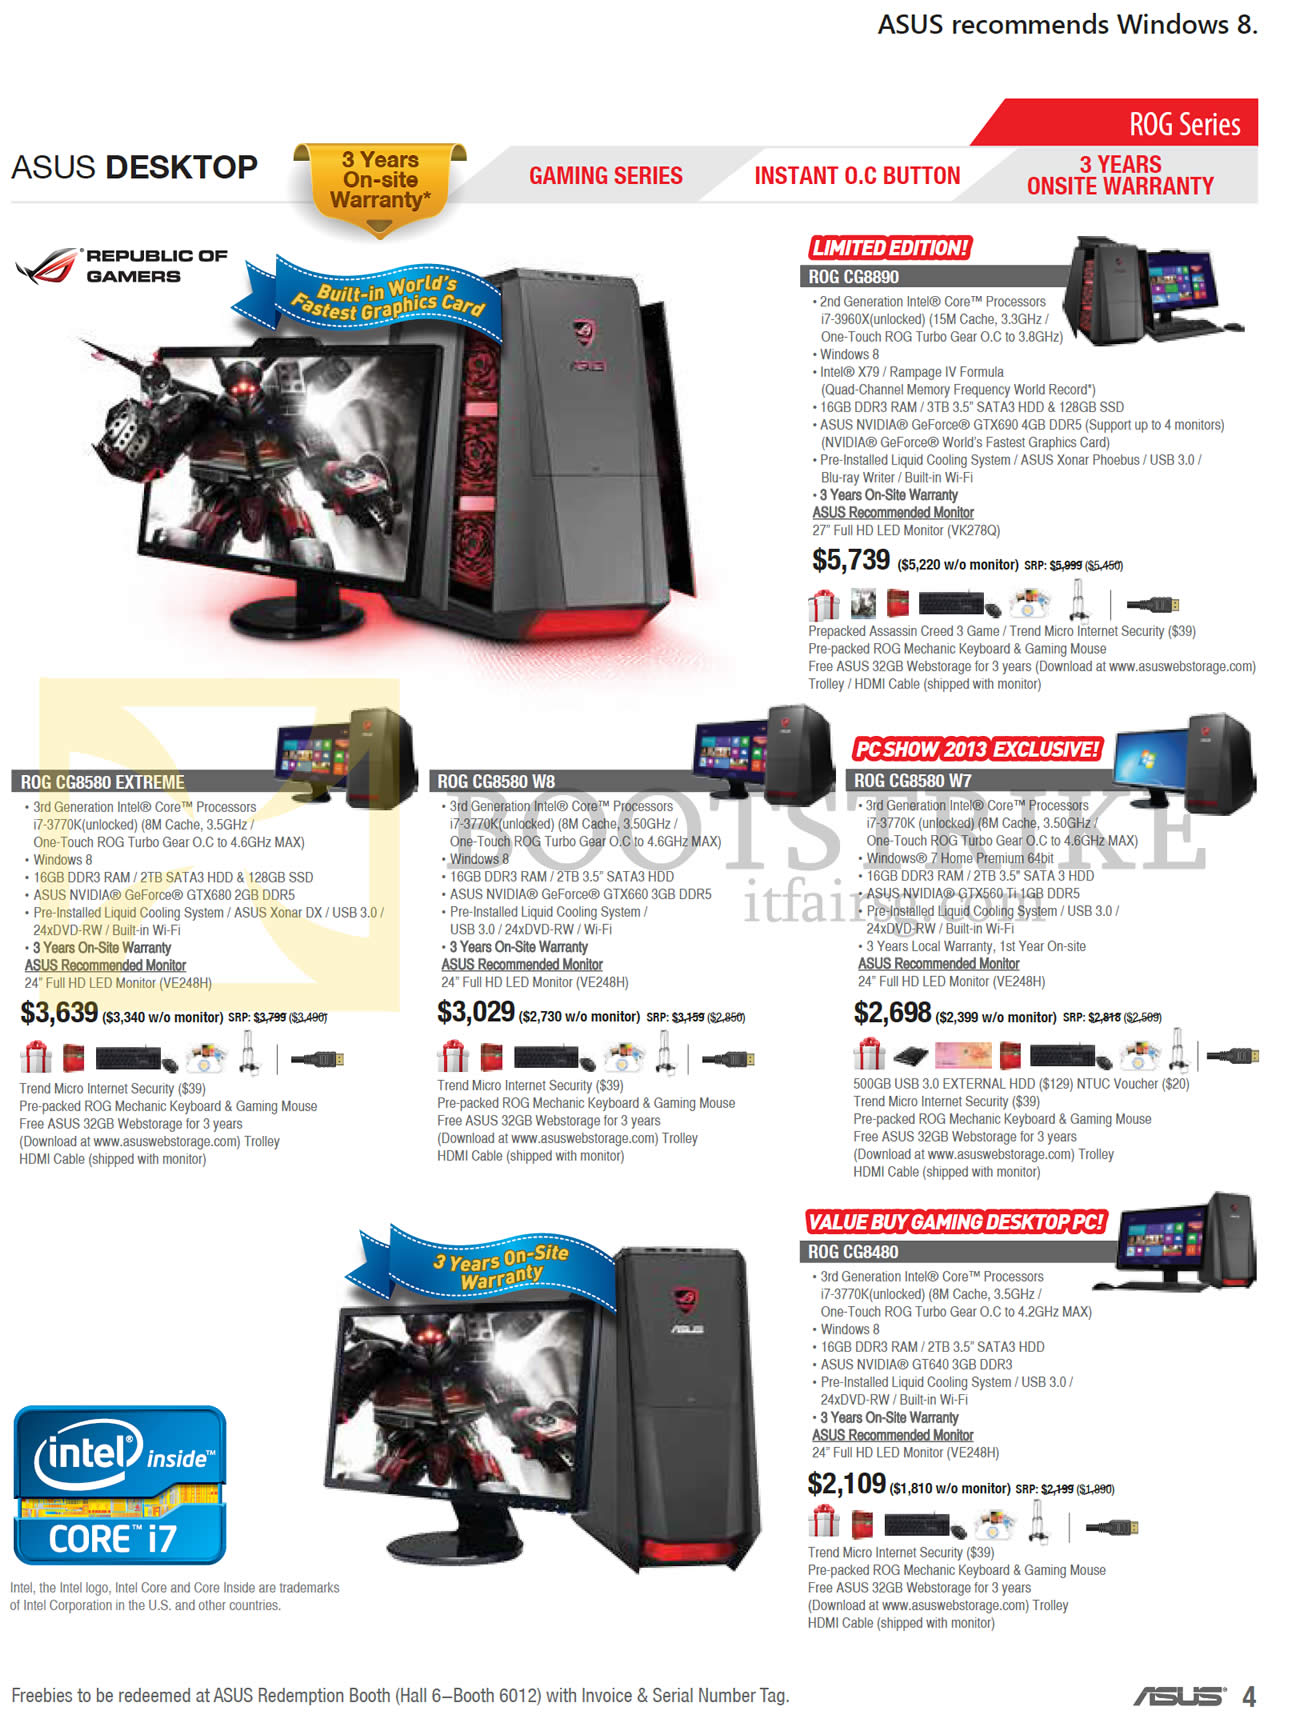 PC SHOW 2013 price list image brochure of ASUS Desktop PCs ROG CG8890, CG8580 Extreme, CG8580 W8, CG8580 W7, CG8480